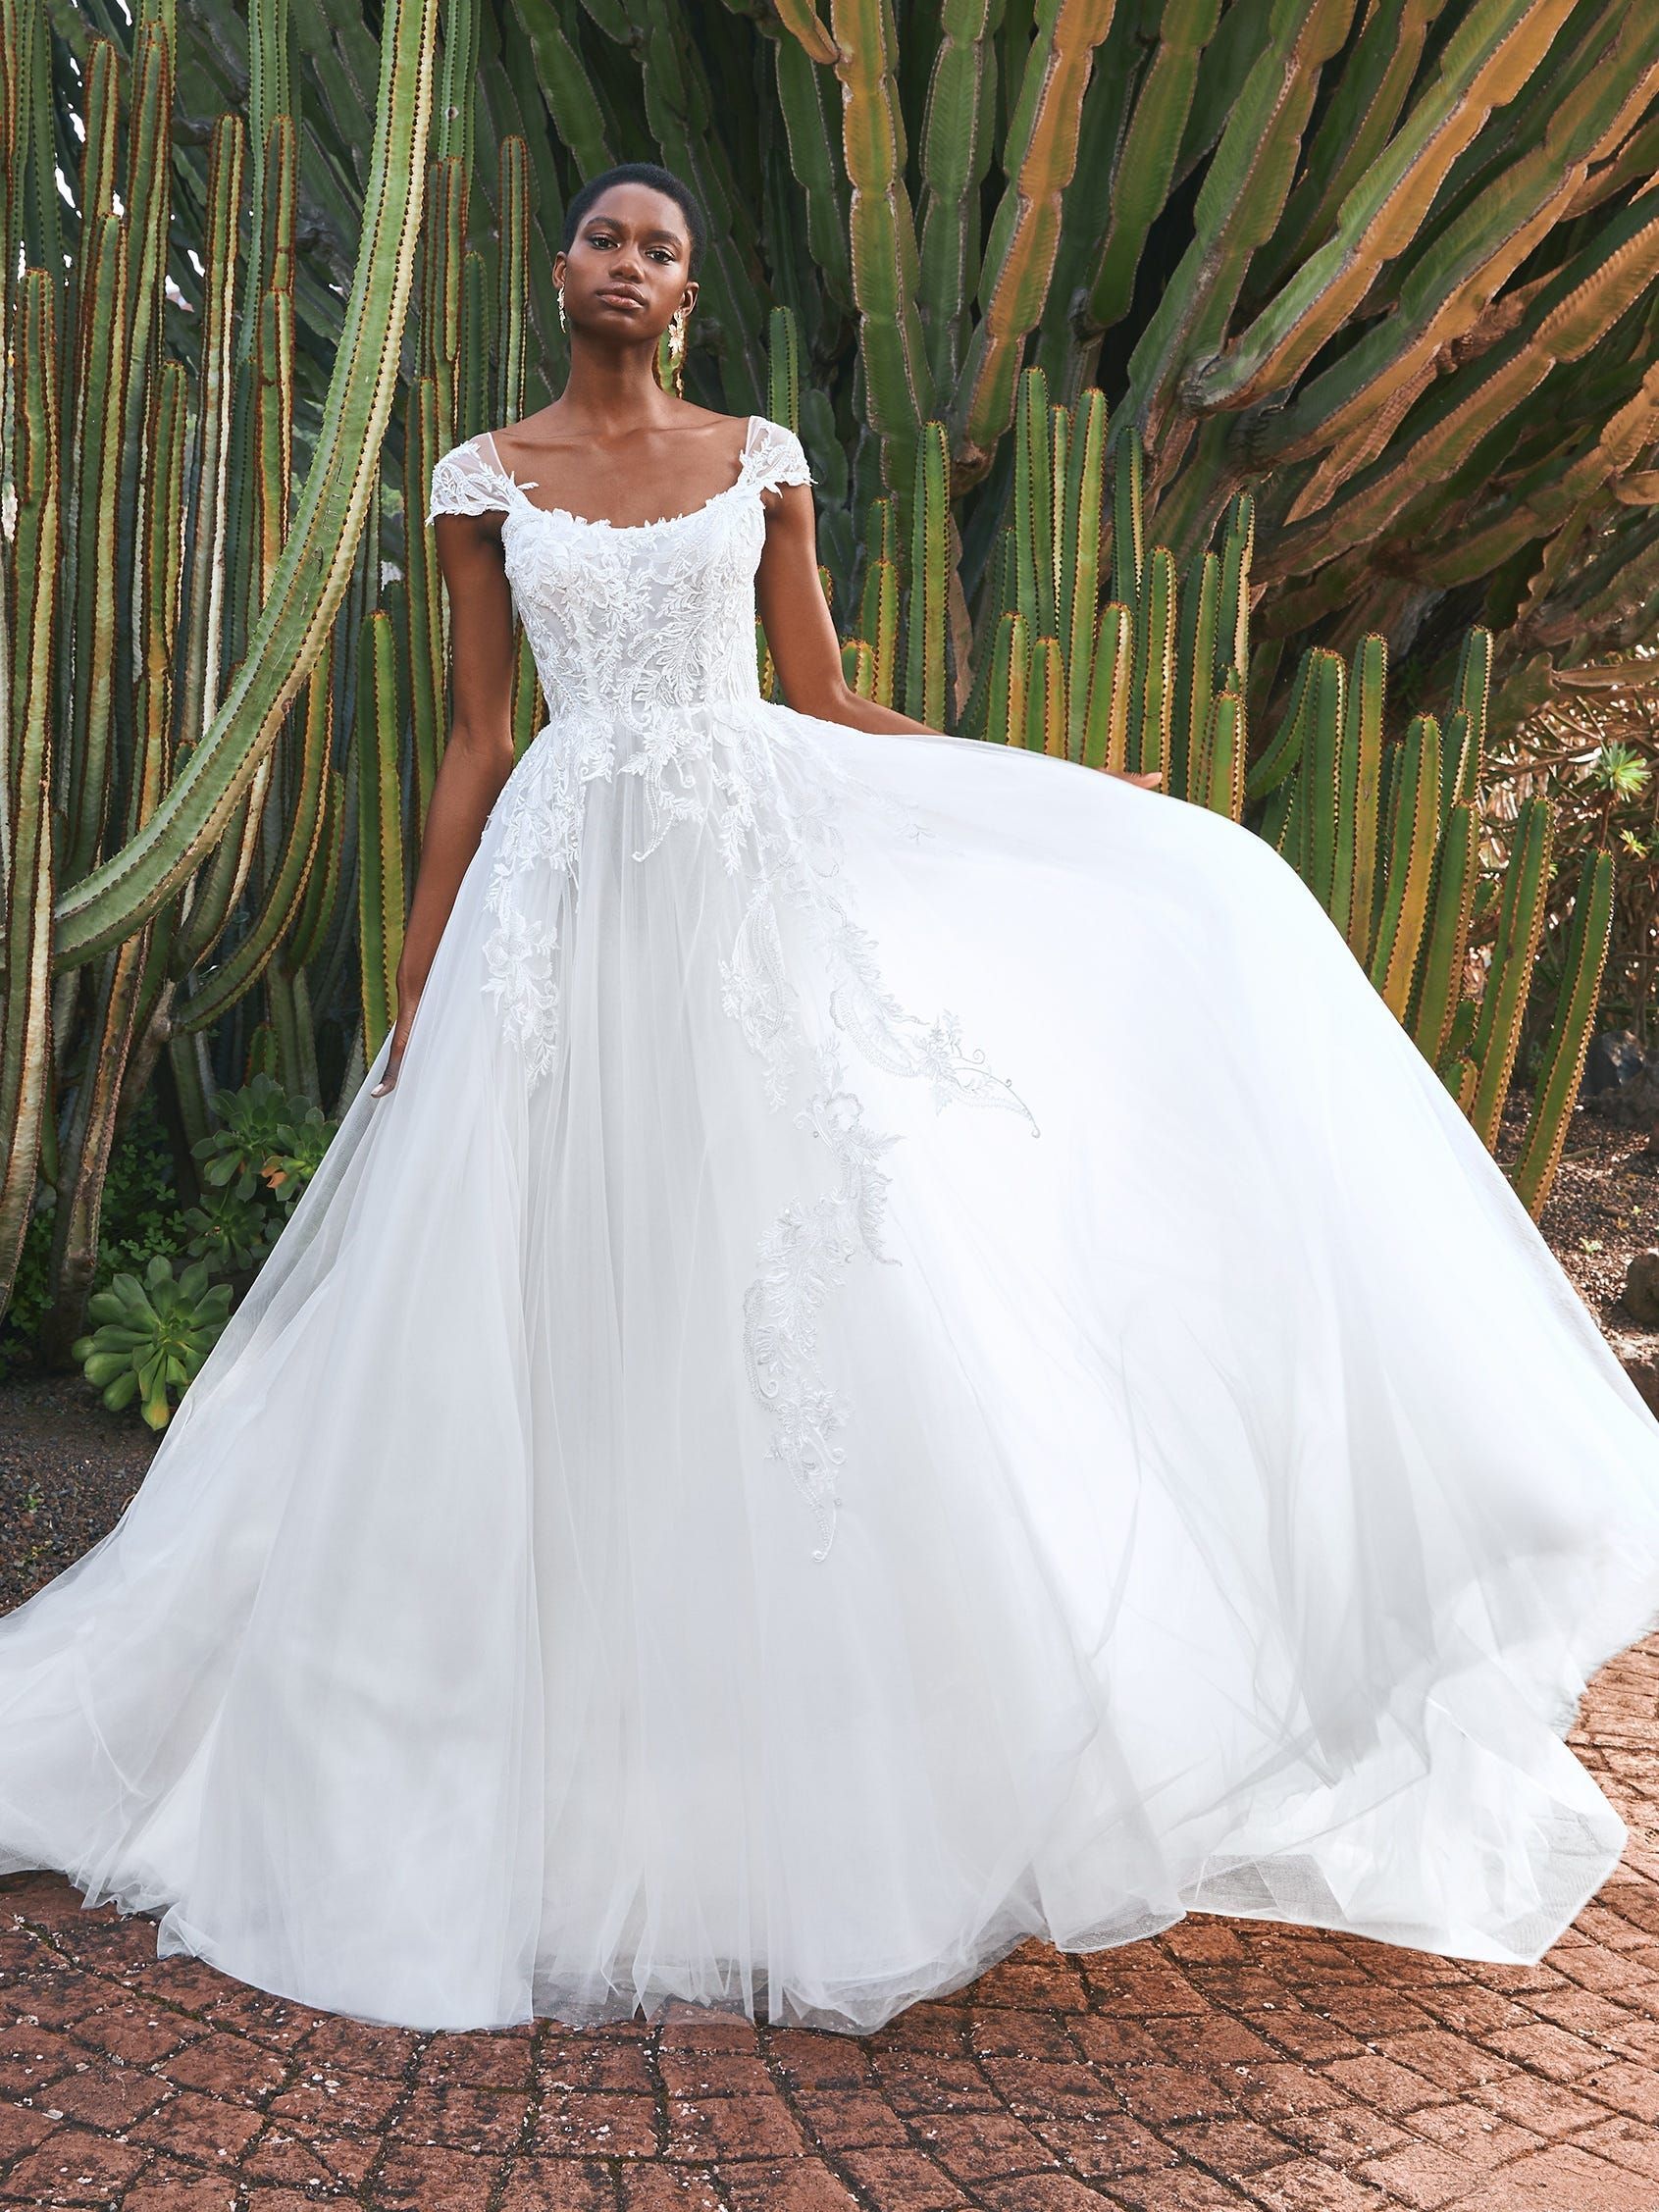 Pronovias wedding dress — Wedding Dress and Jewelry Fashion Advice Blog |  The Bridal Finery